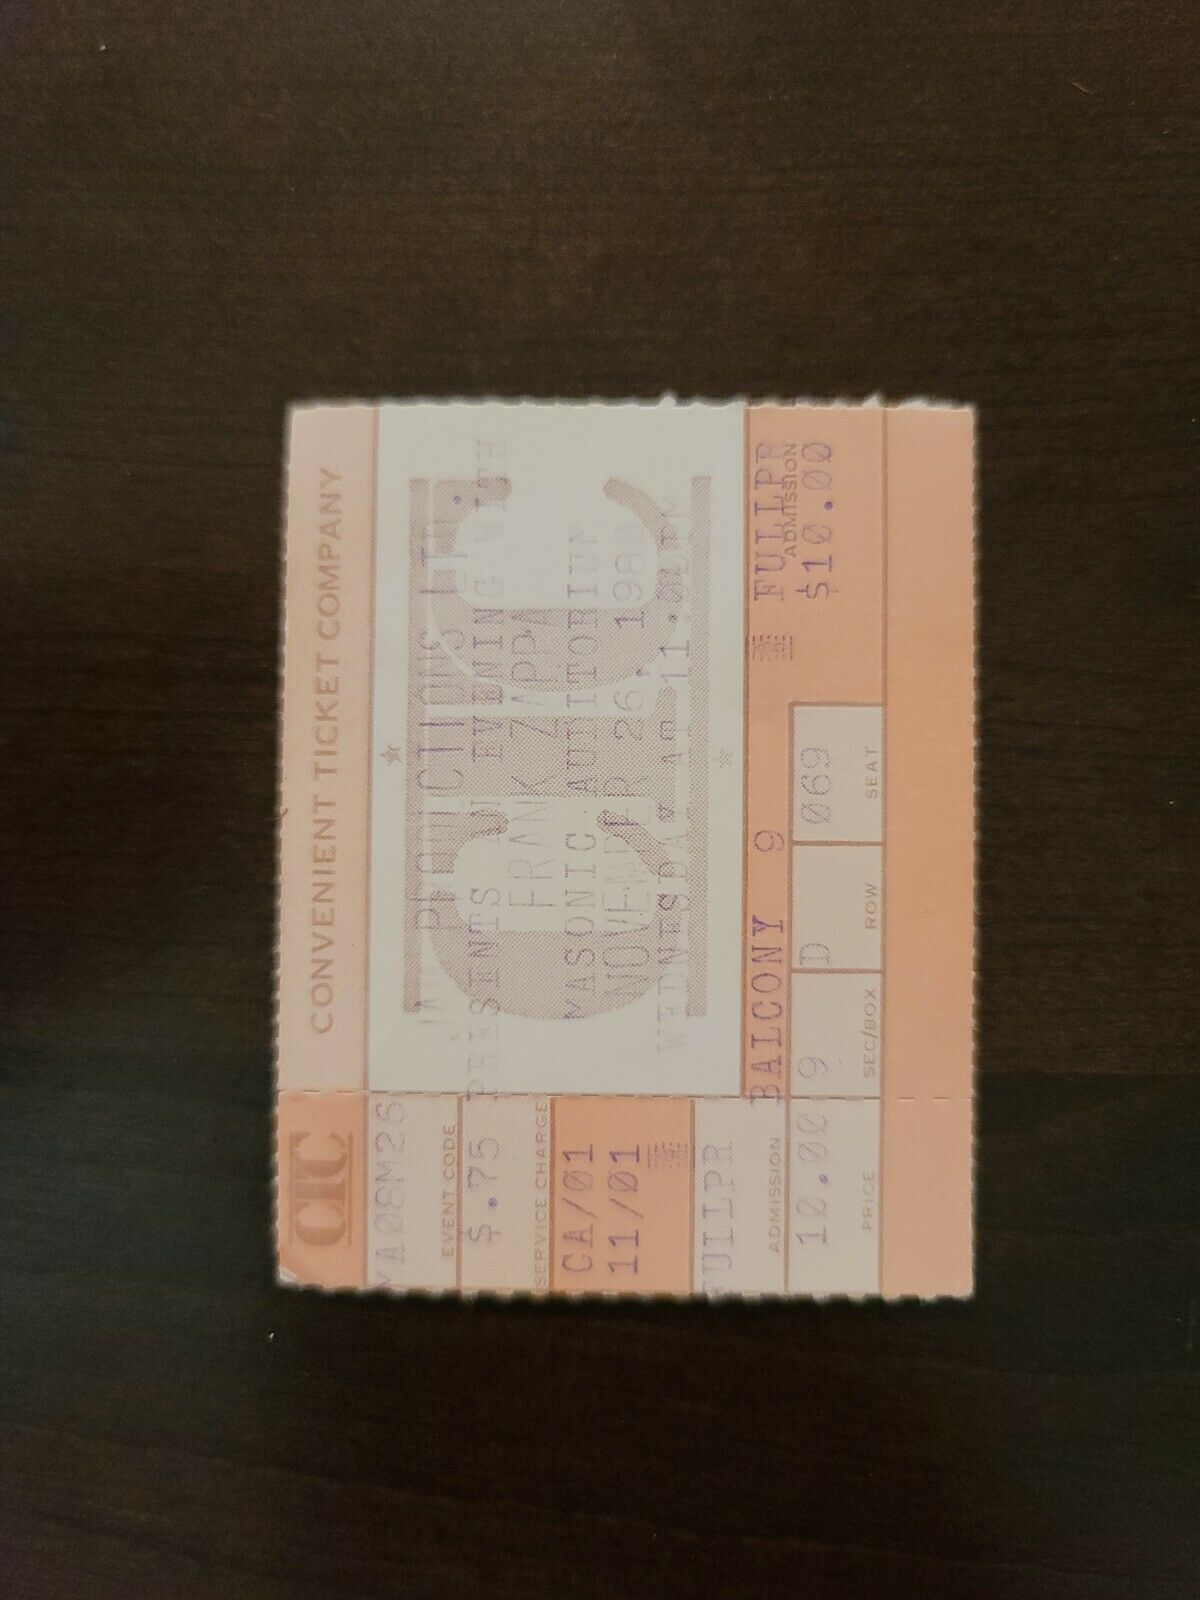 Frank Zappa 1980, Detroit Masonic Theater Original Concert Ticket Stub